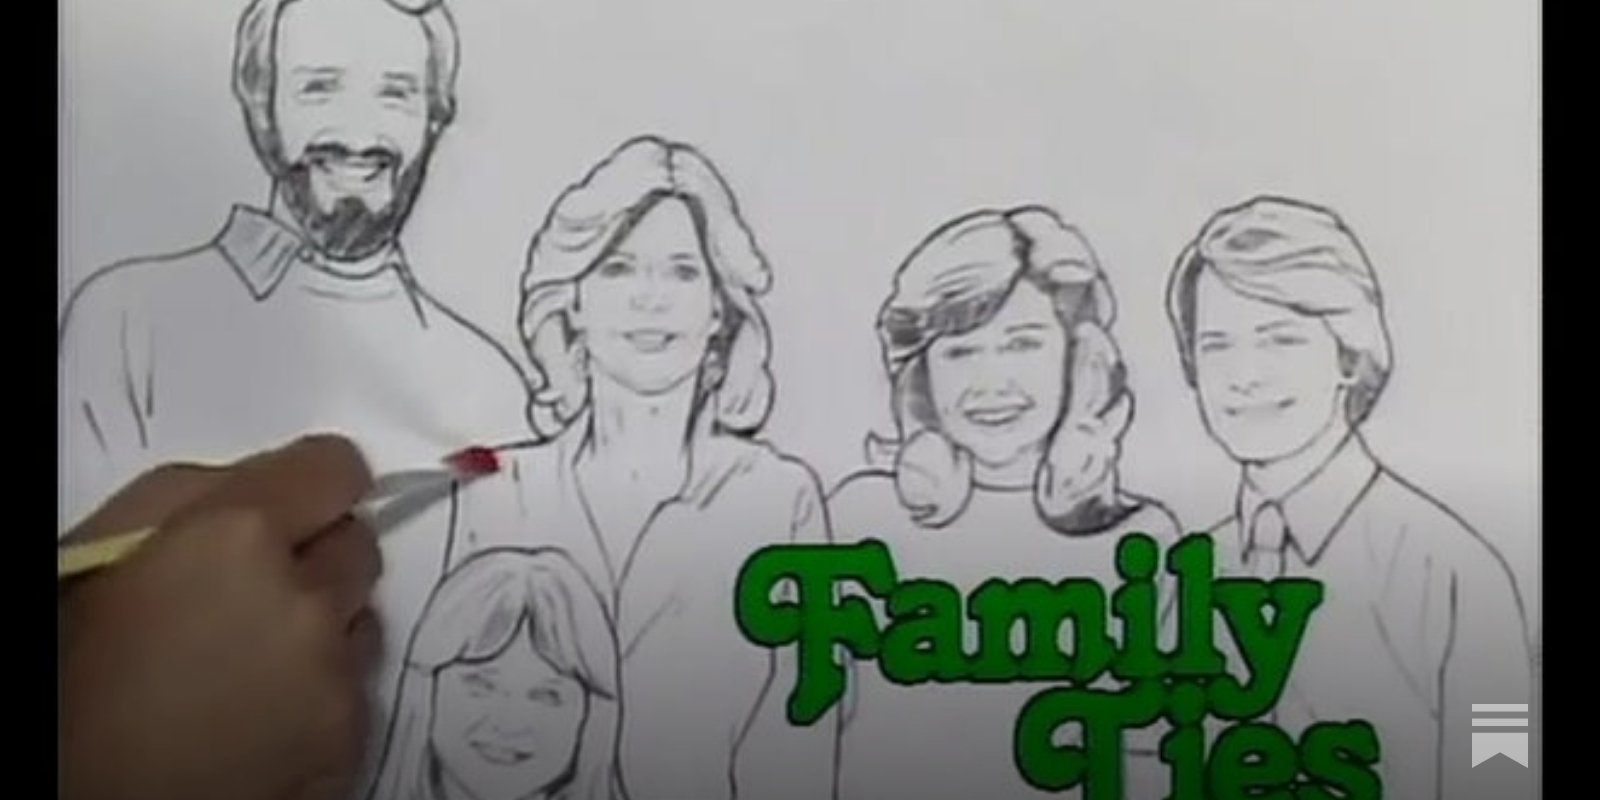 EE Brand Story Slideshow: Family Ties